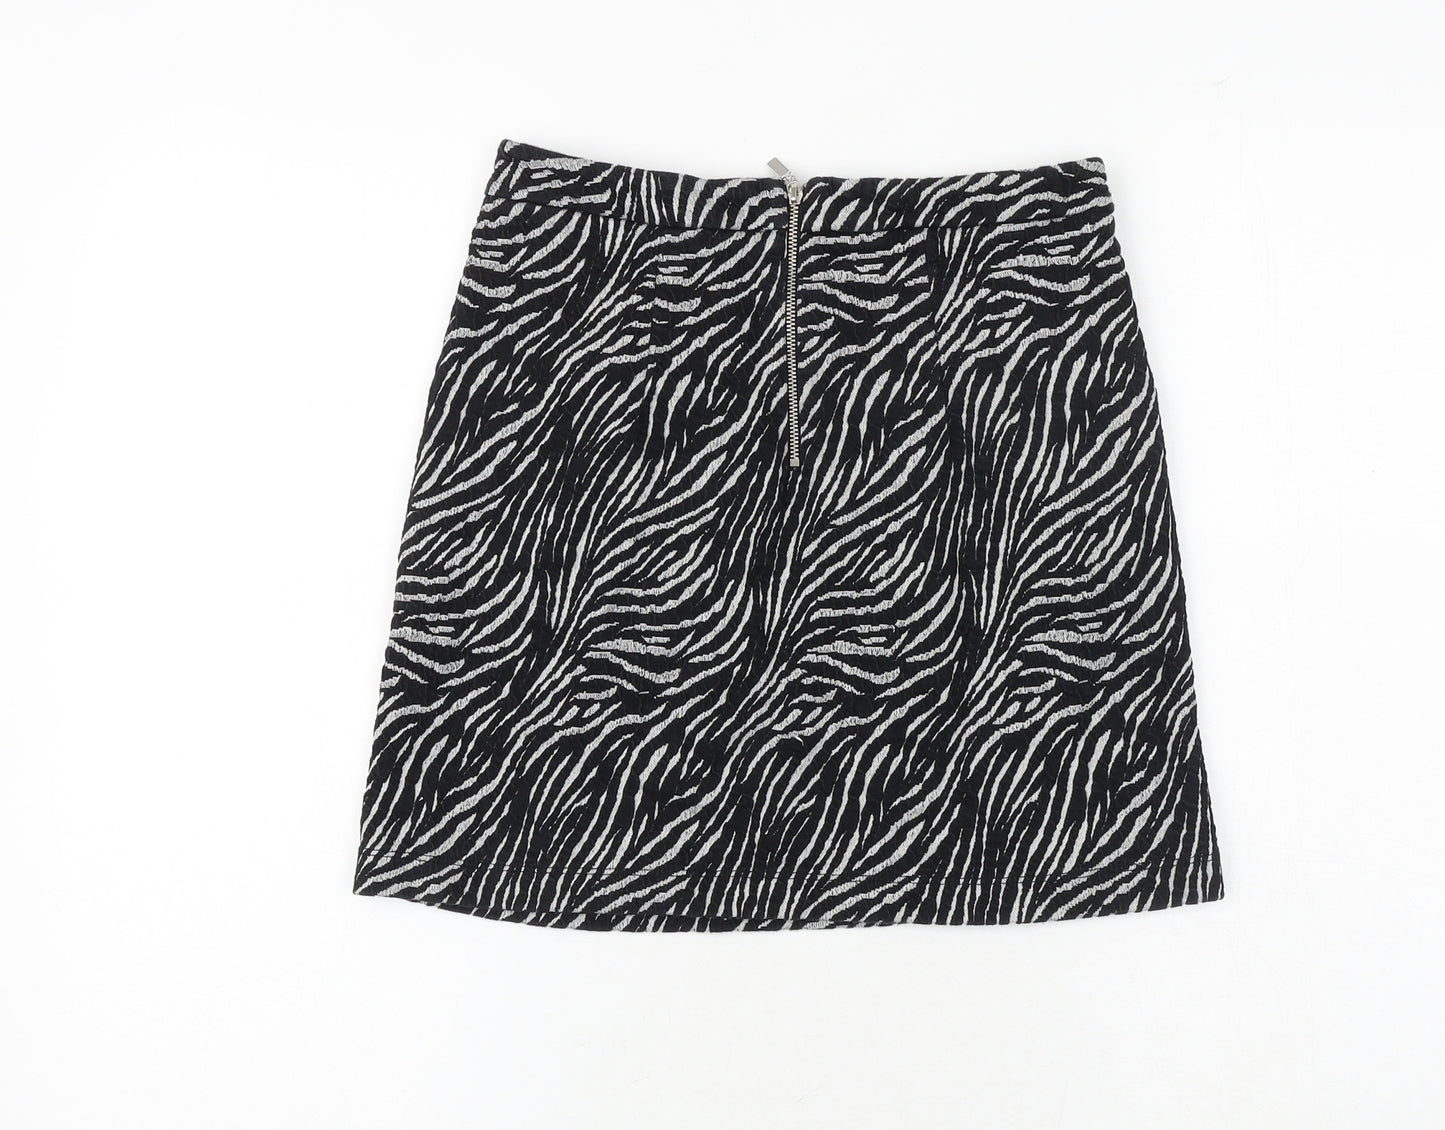 NEXT Womens Black Animal Print Cotton A-Line Skirt Size 6 Zip - Zebra Pattern